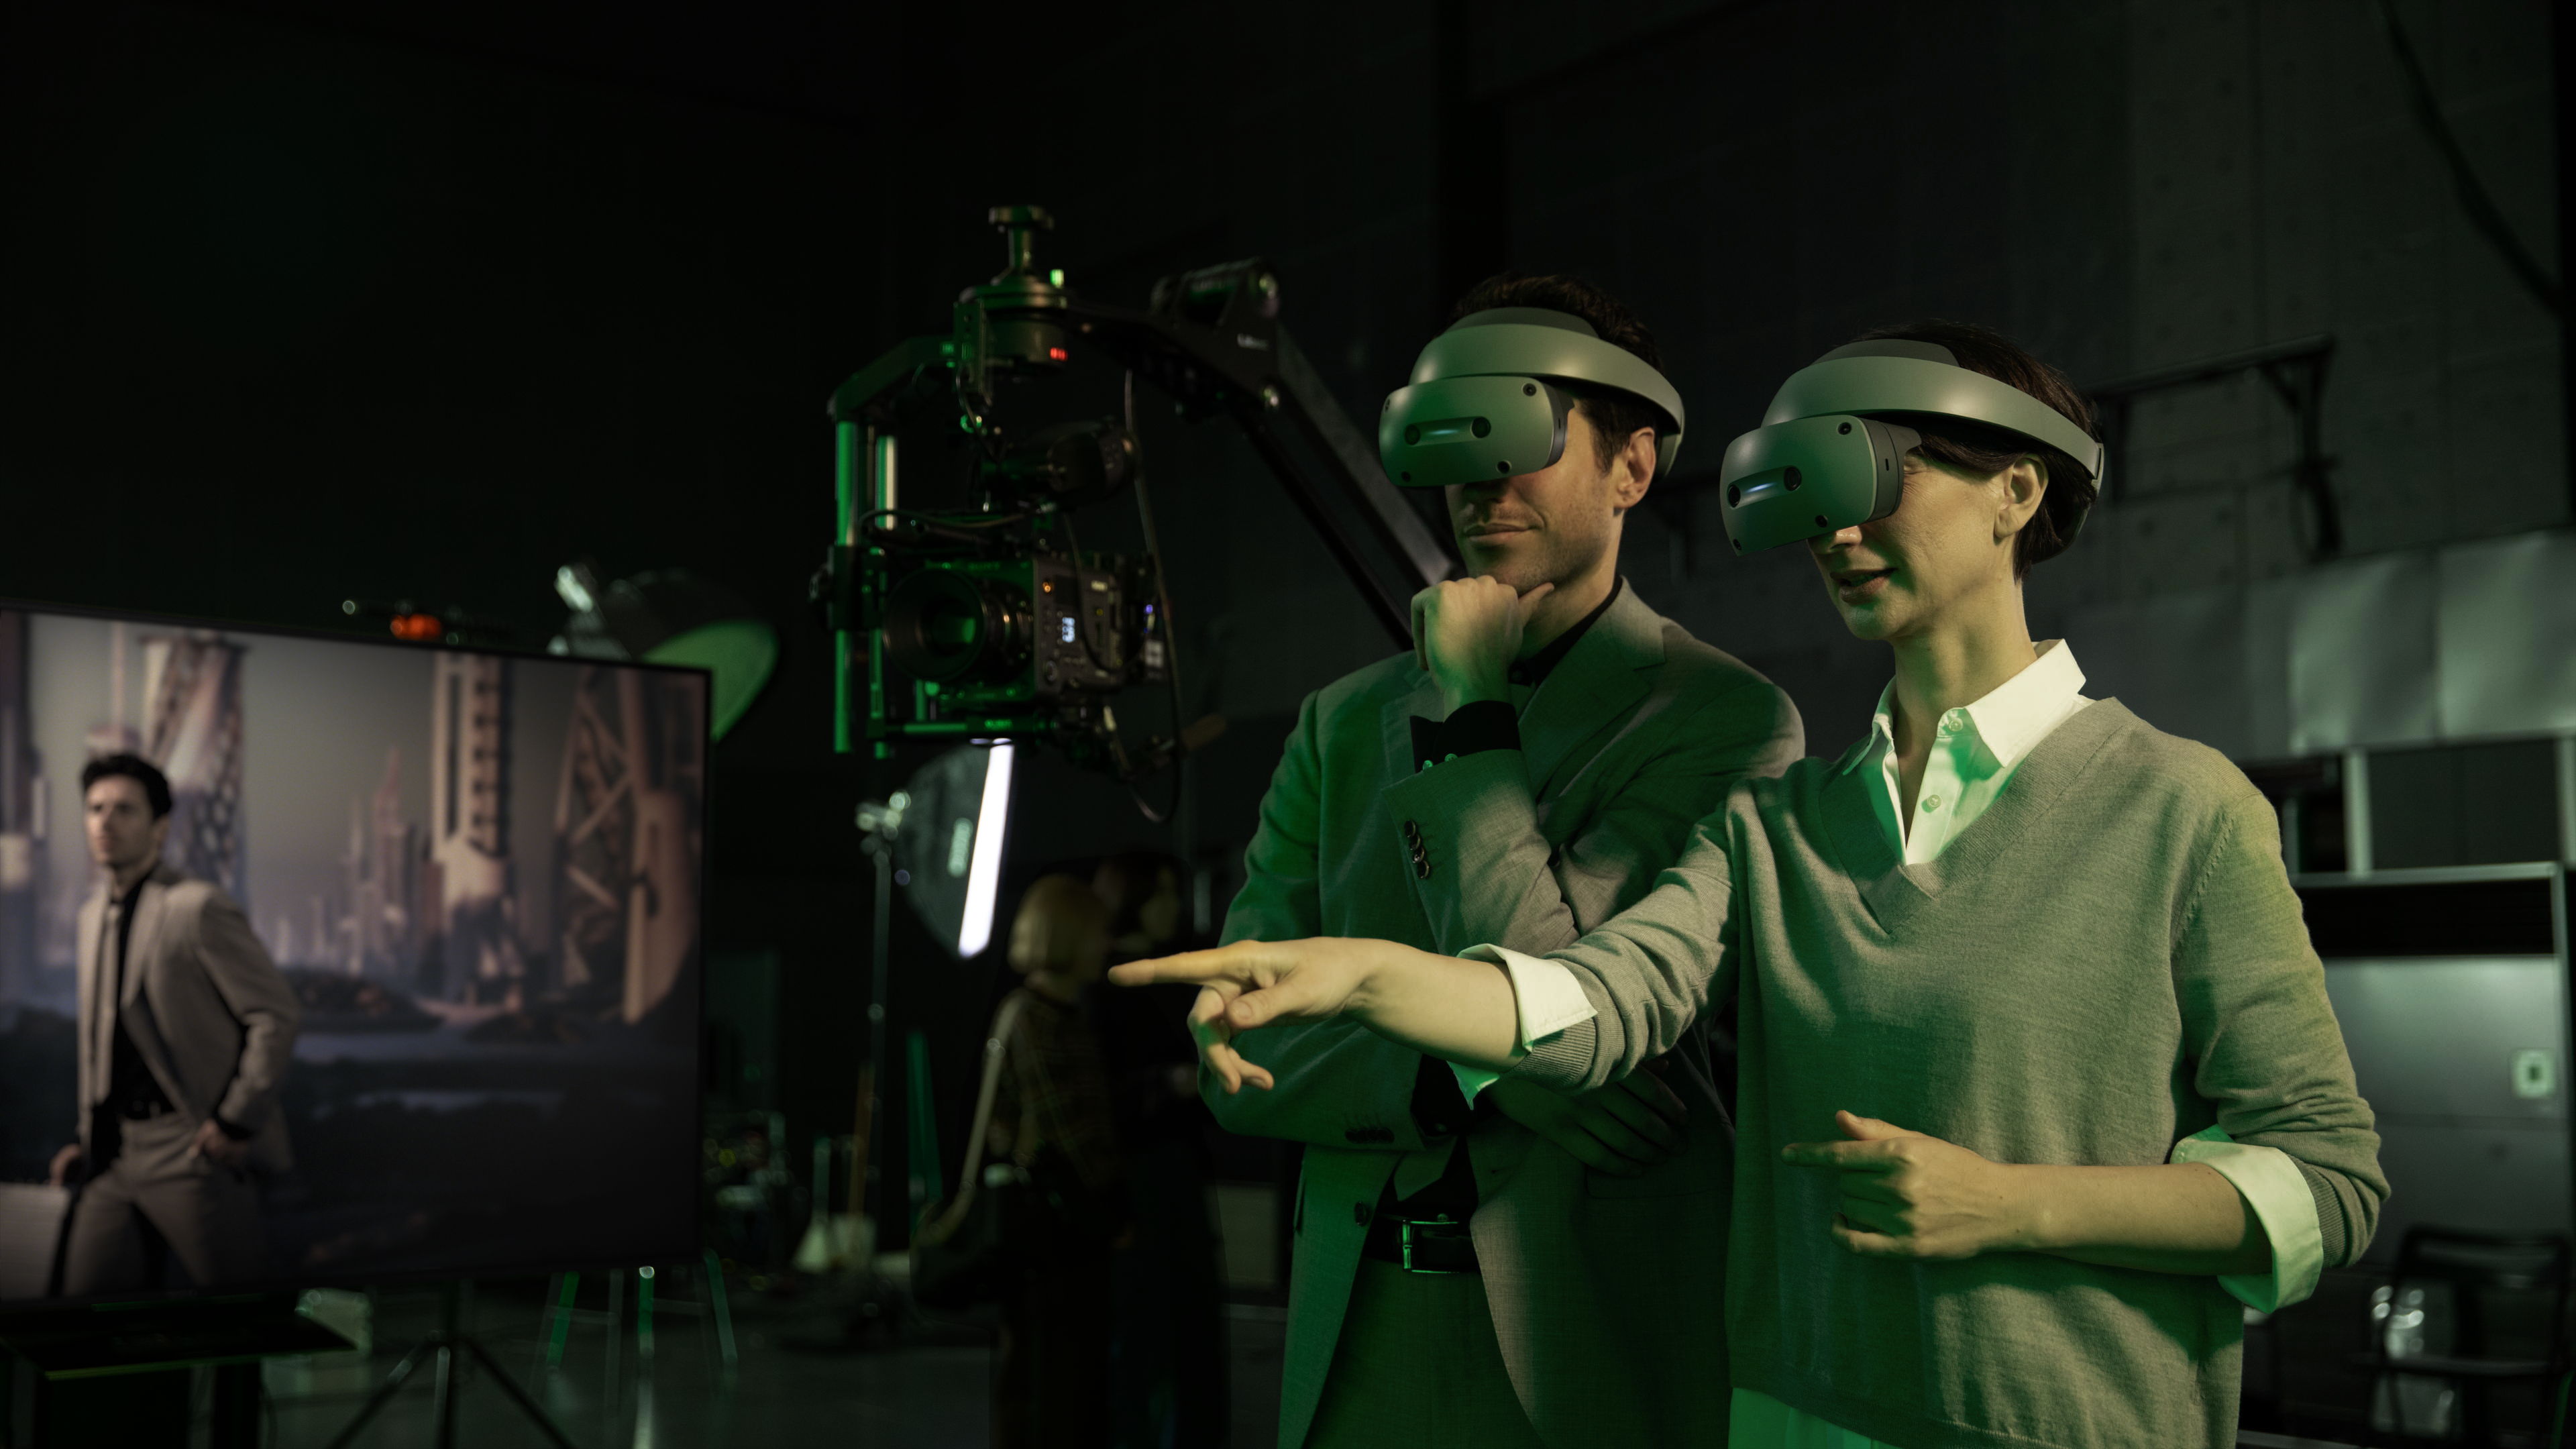 Systems bei der Filmproduktion mit 3D-Technologien3D-Technologien